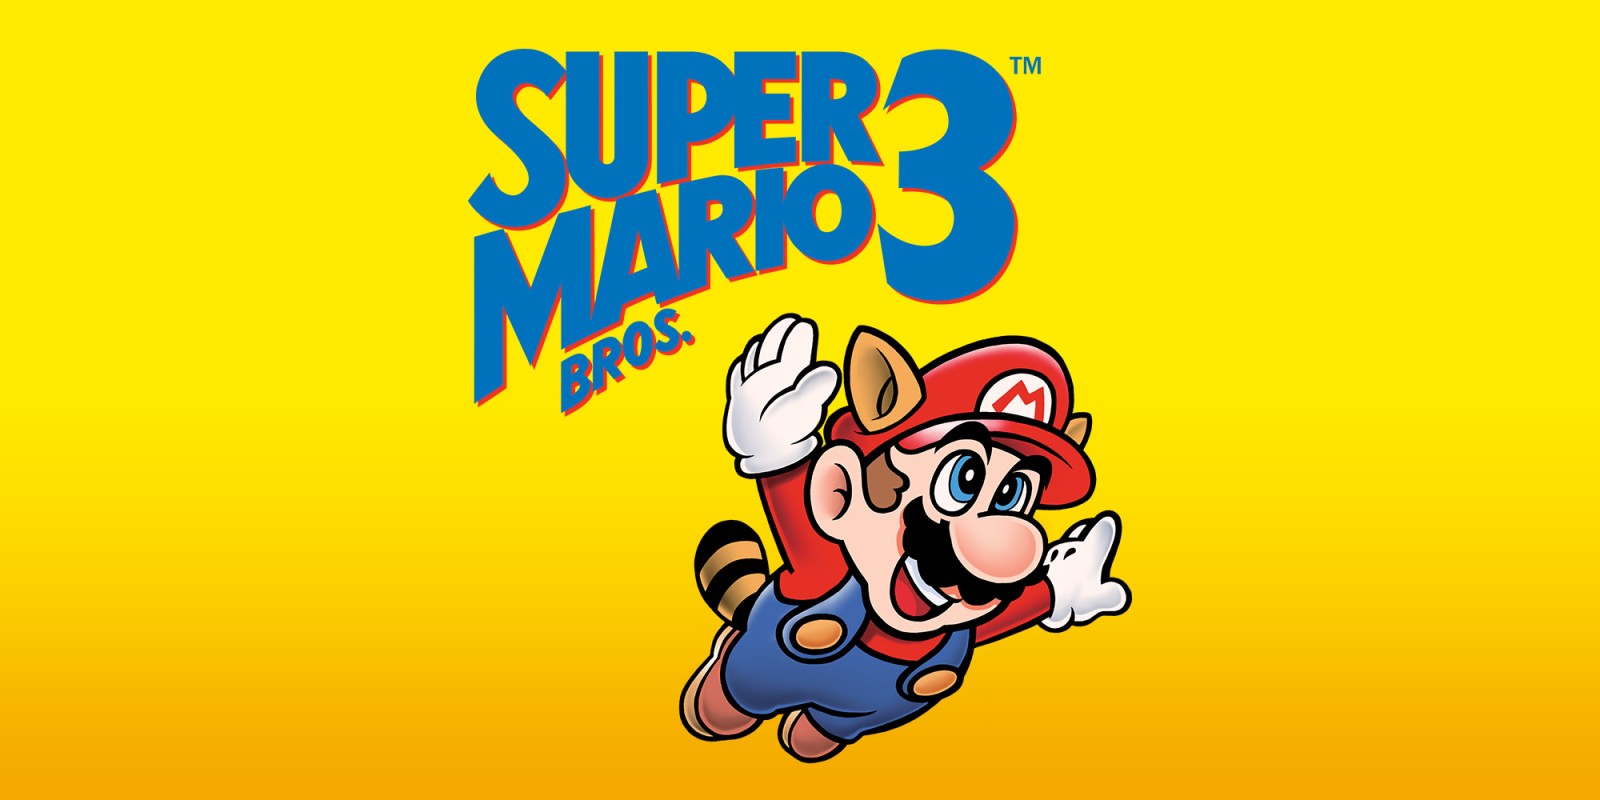 instal the last version for mac The Super Mario Bros